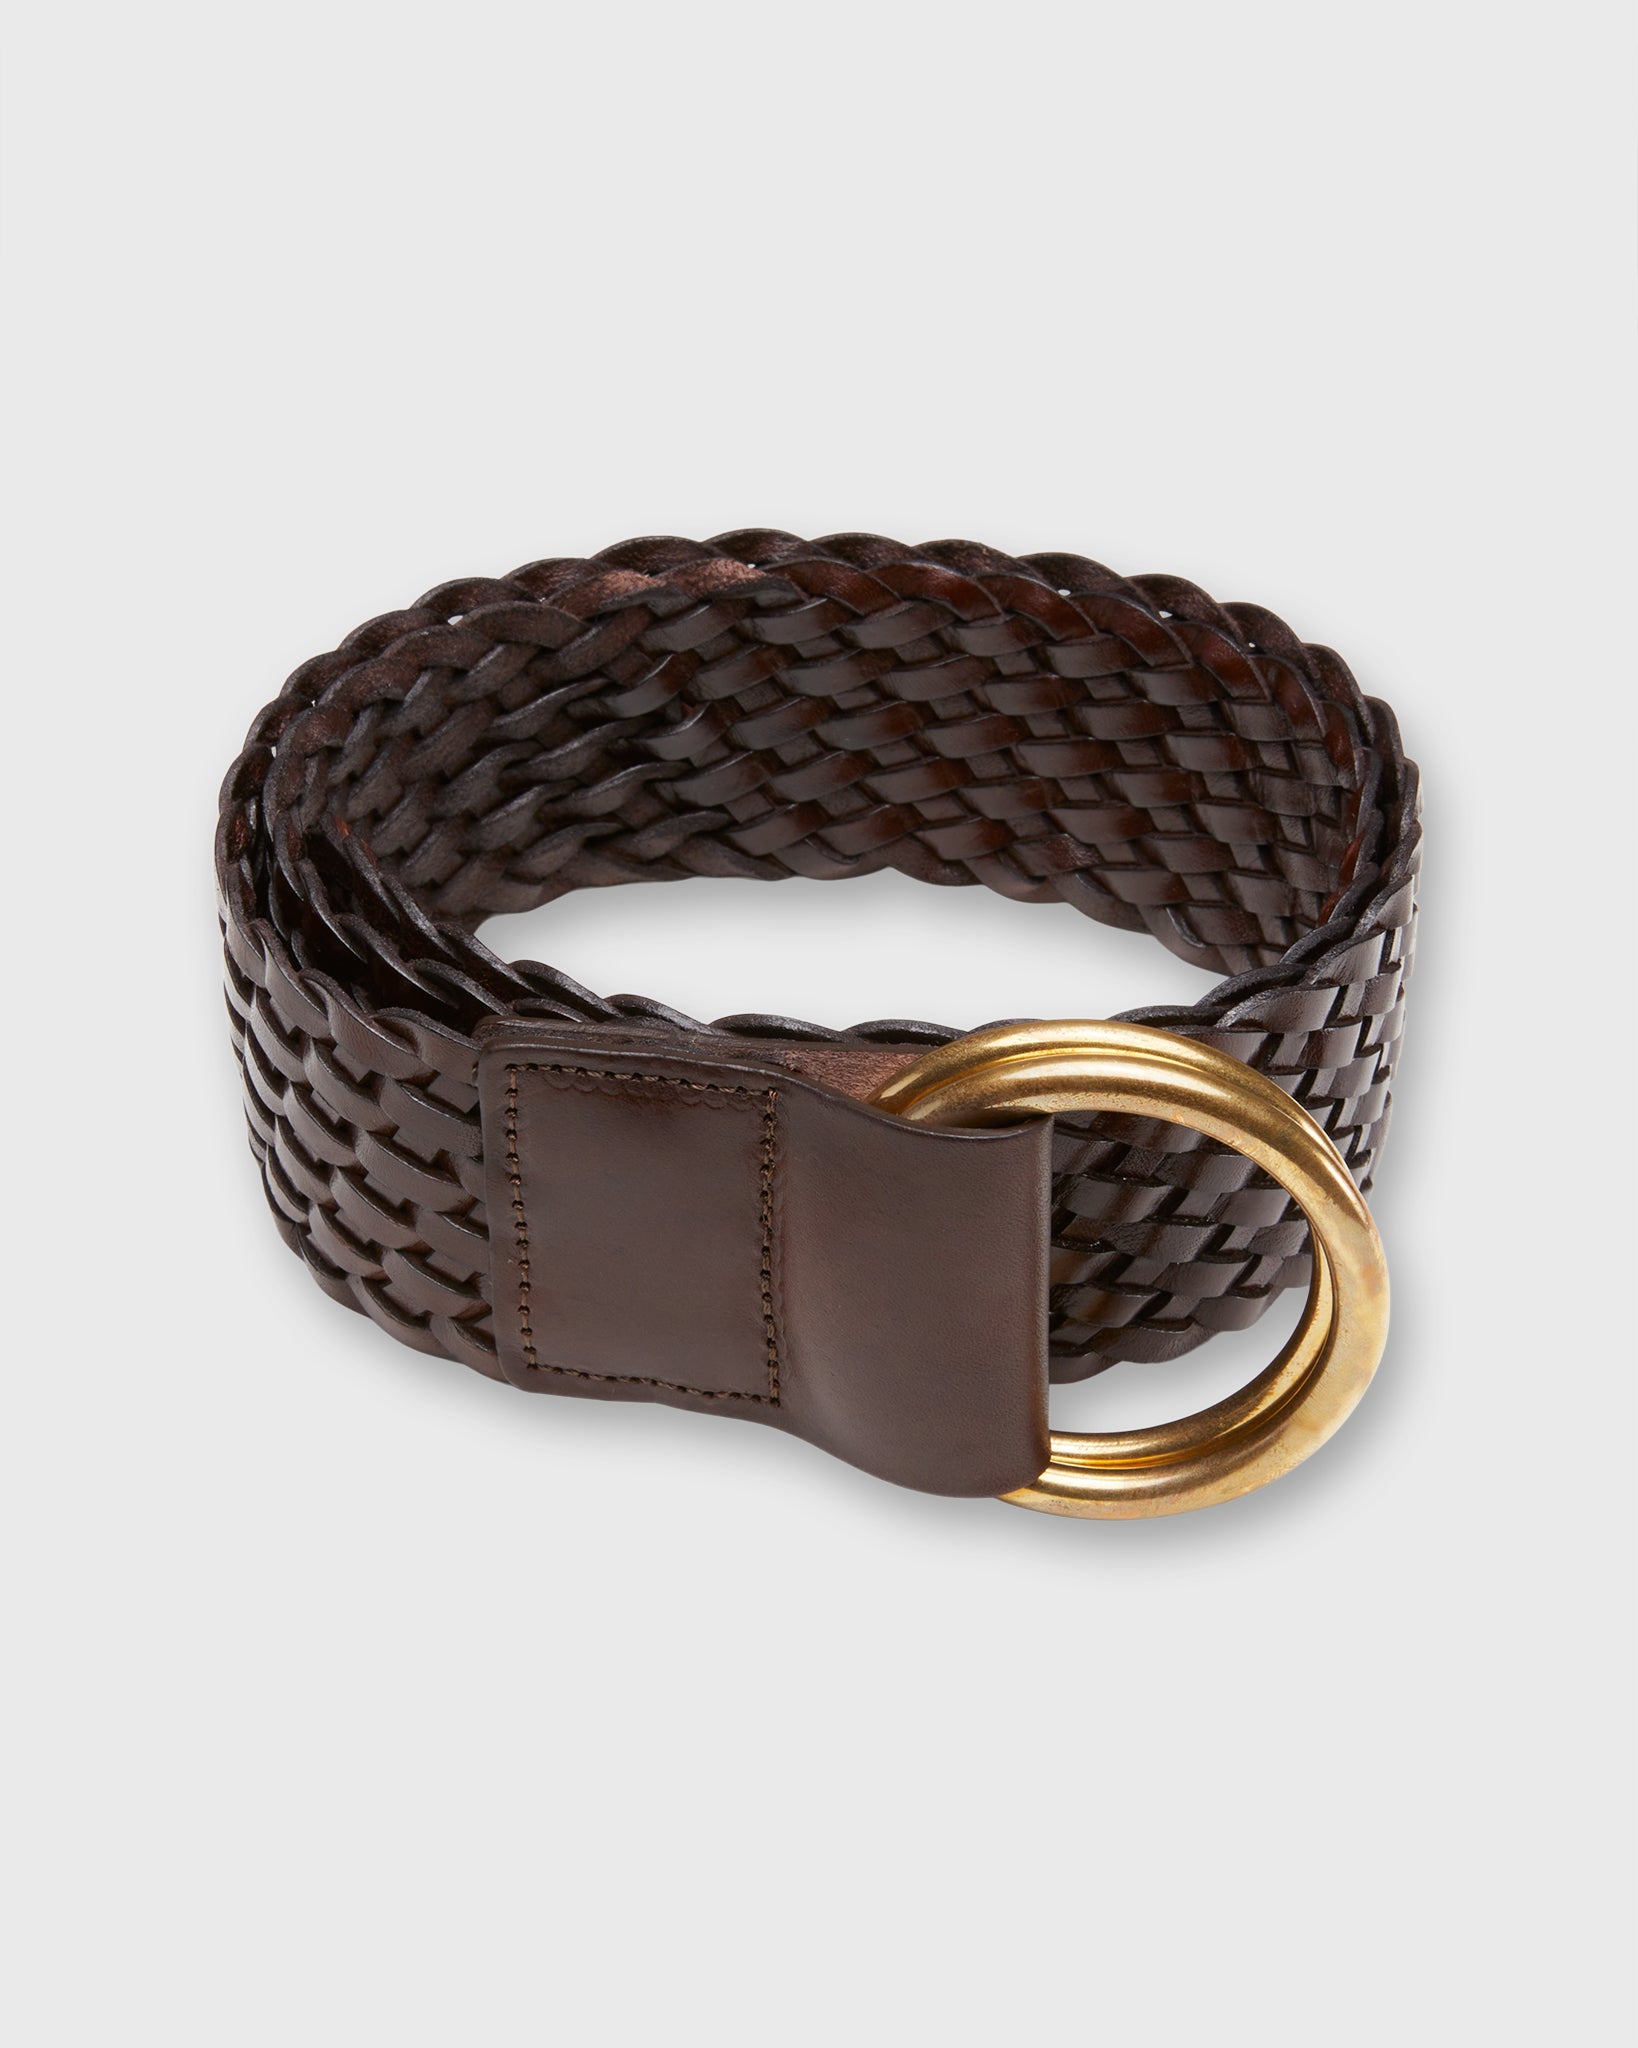 2 Pcs Women's Braided Leather Belt Thin Woven Waist Belts for